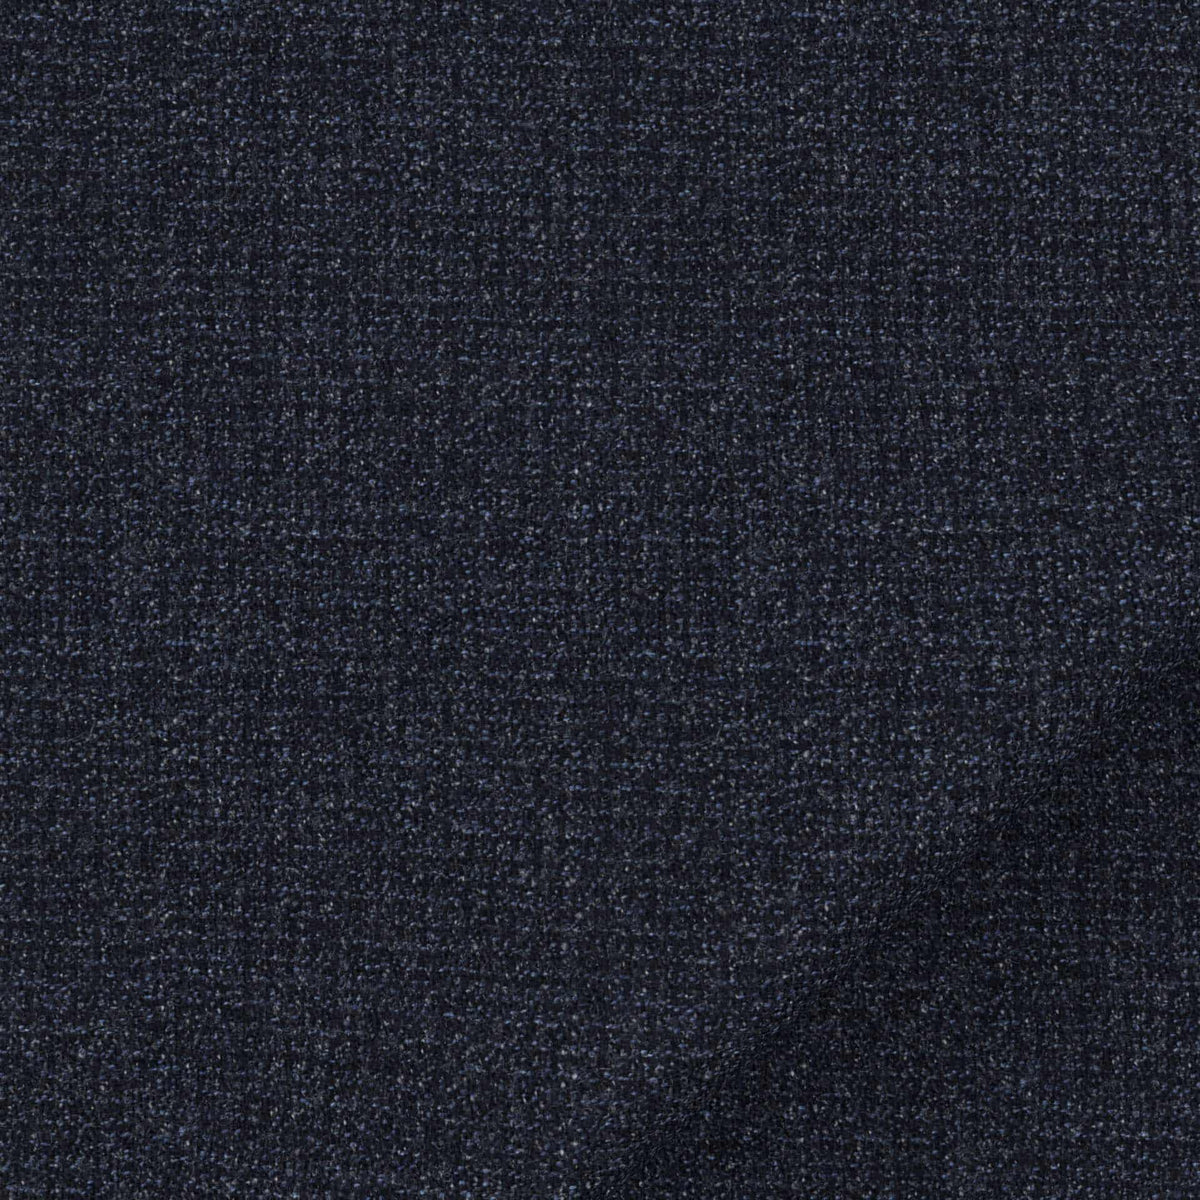 Custom-made-suit-basket-weave-dark-navy-blue-Italian-fabric-onceaday